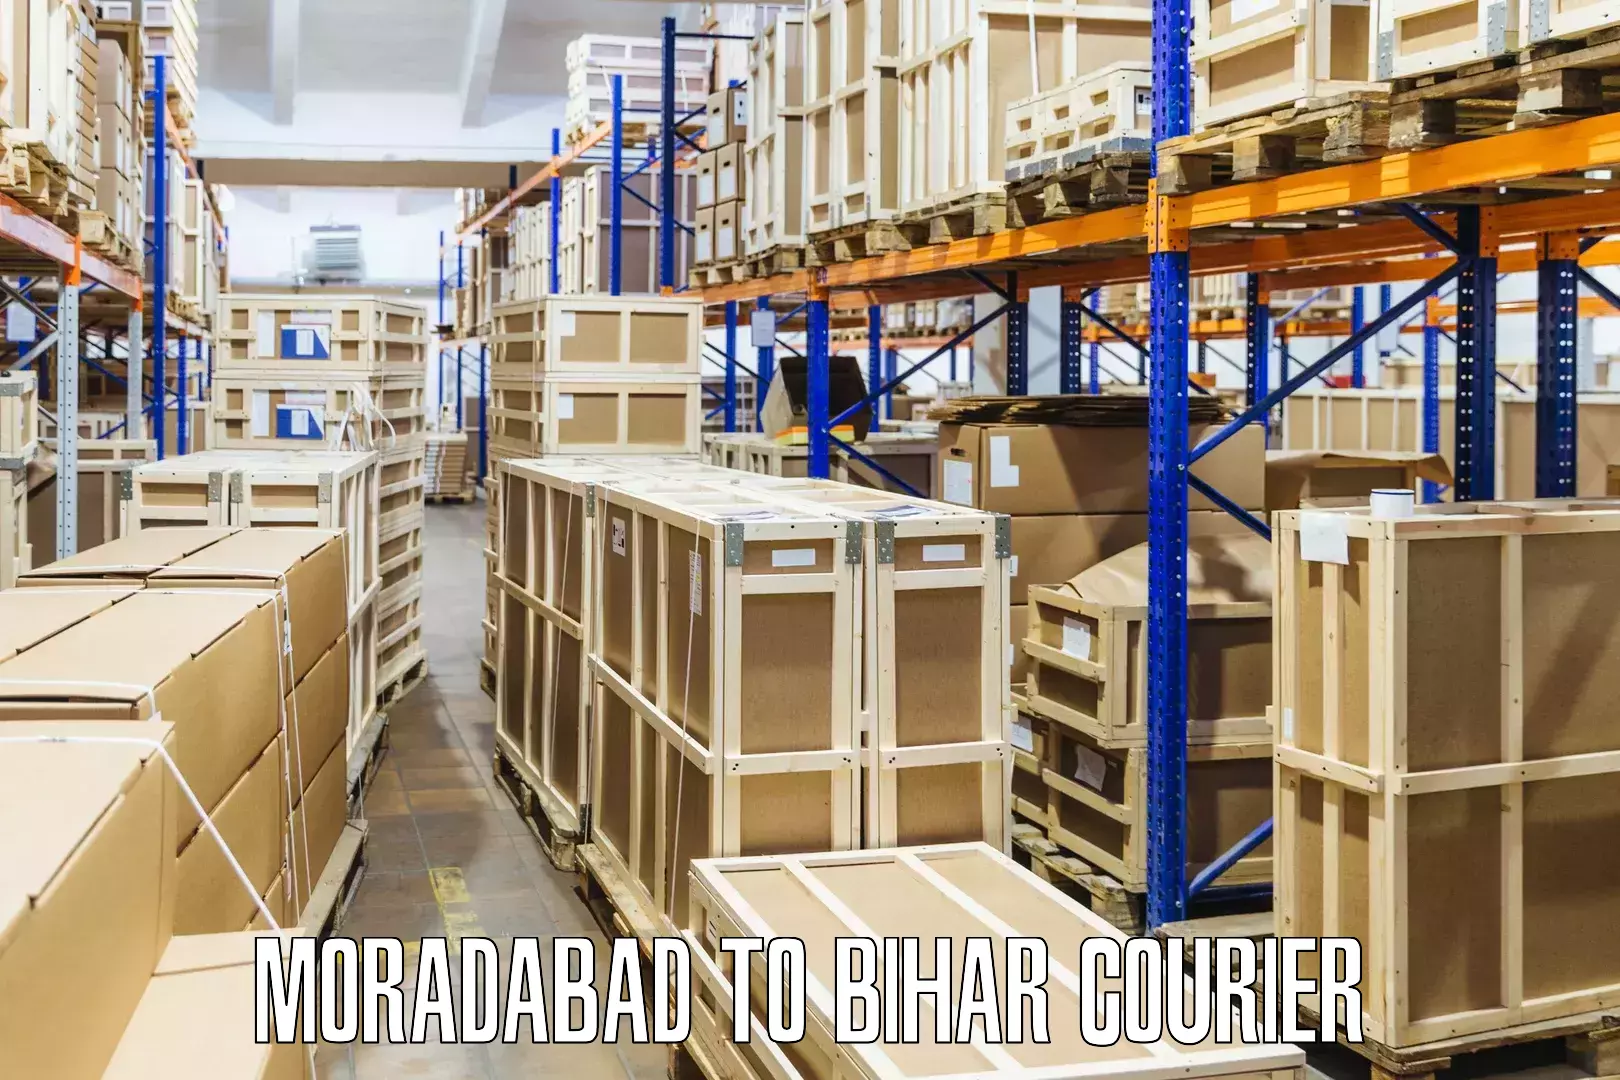 Global courier networks Moradabad to Bihar